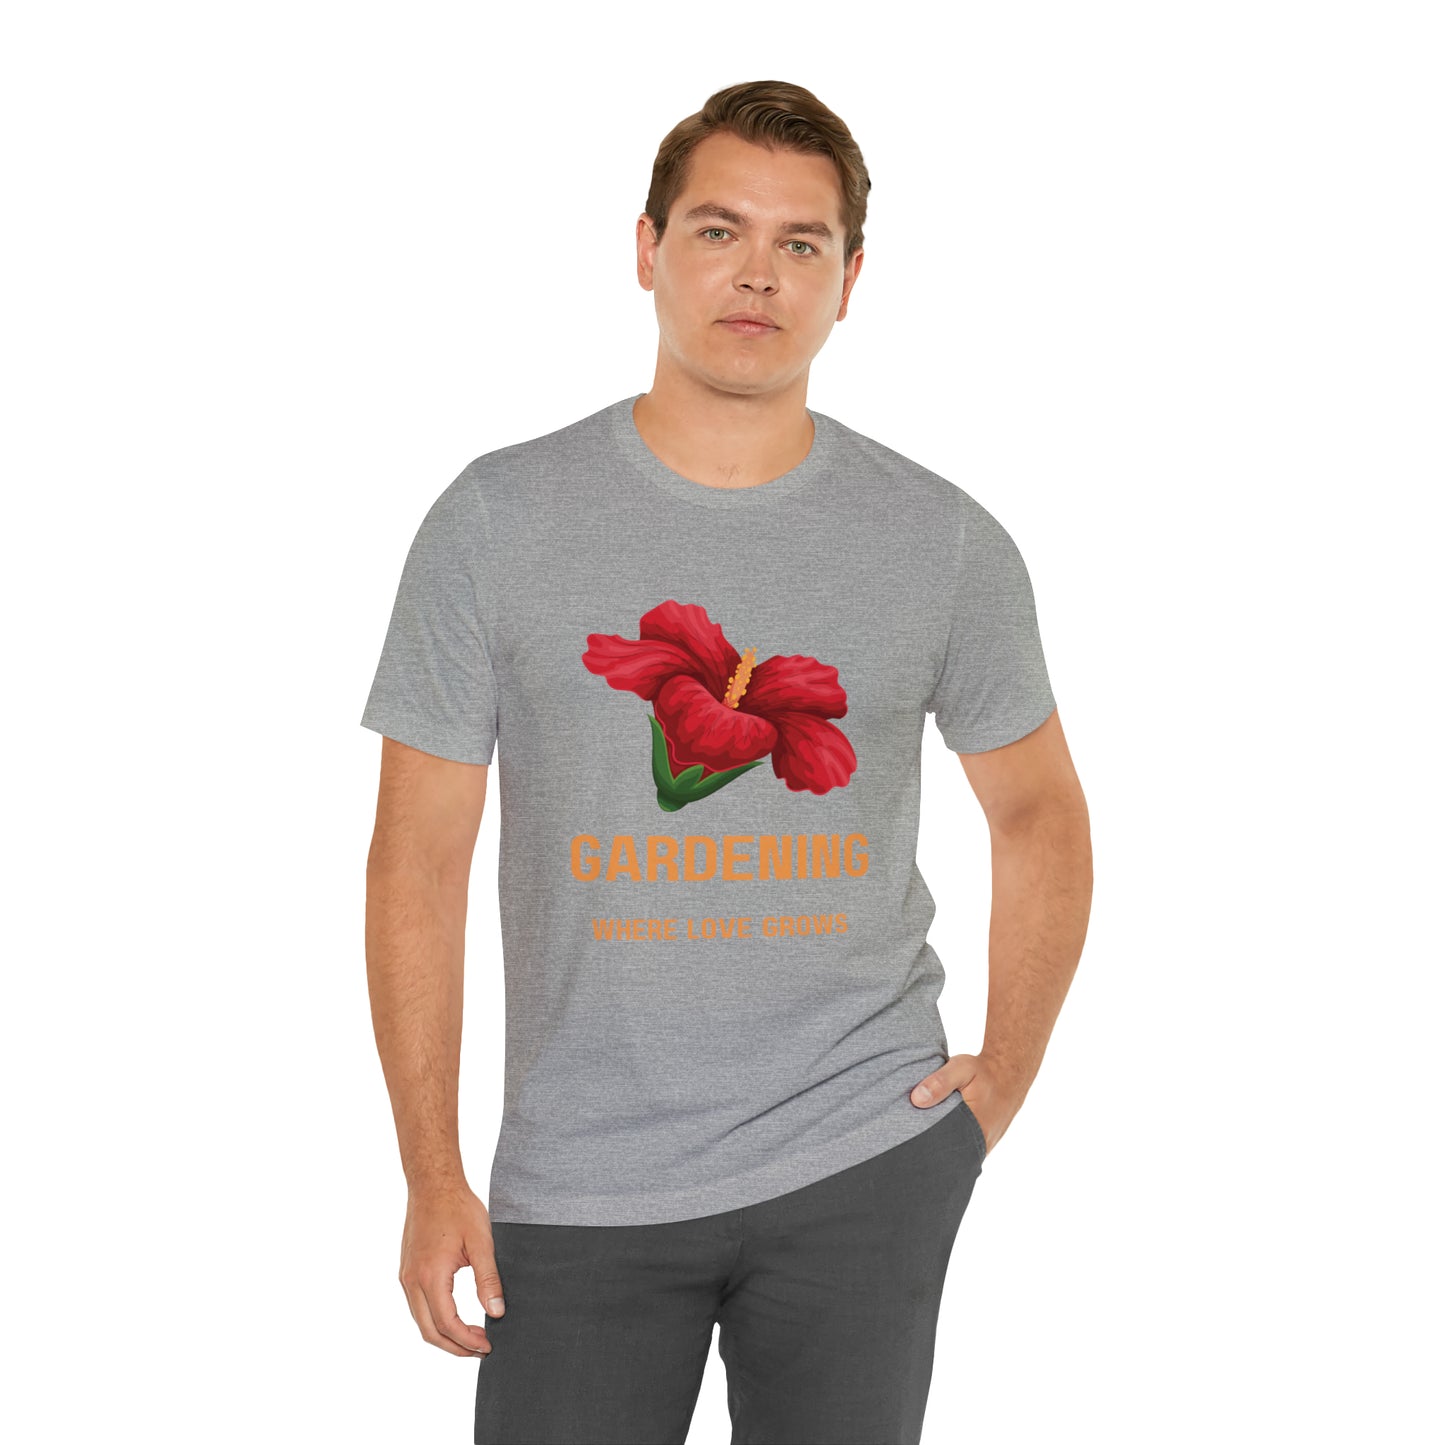 T-Shirt for Garden Enthusiasts | For Gardeners | Gardener Gift Idea Tee T-Shirt Petrova Designs